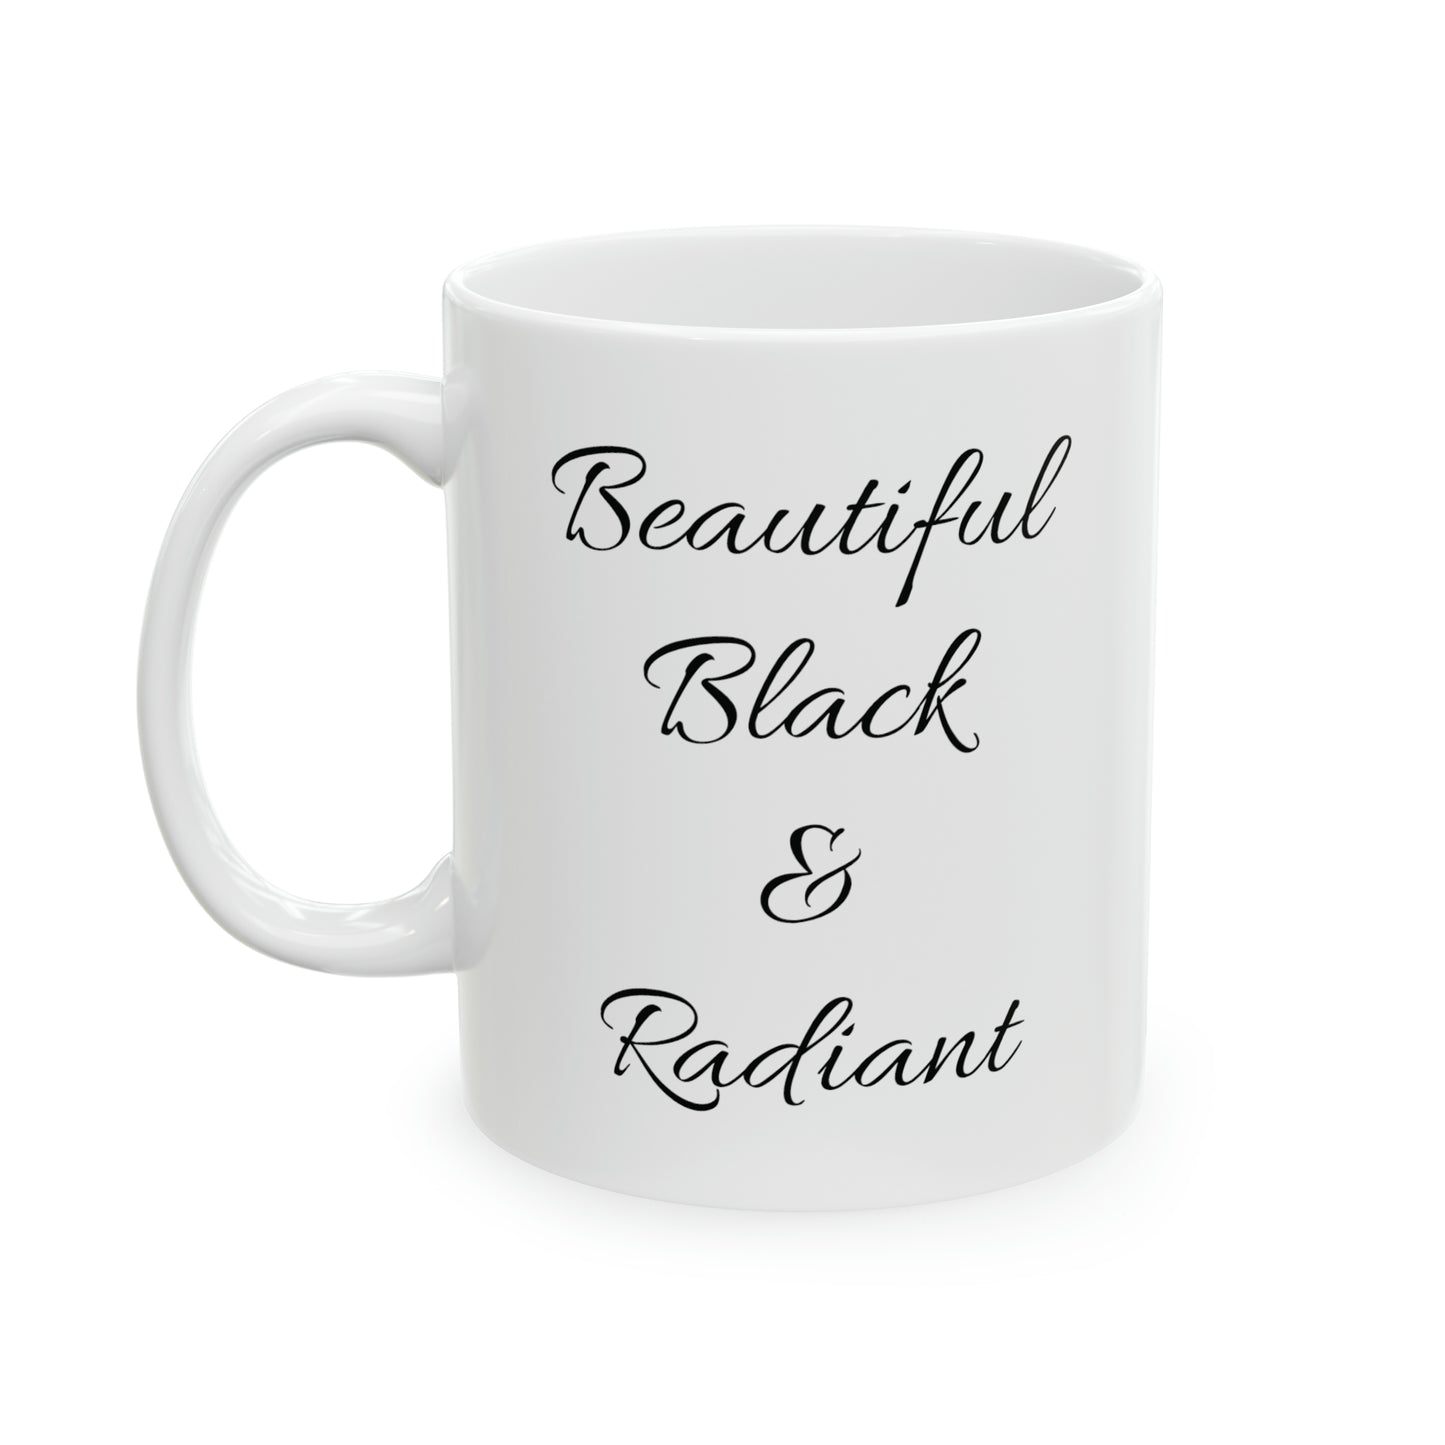 Black and Radiant- Mug